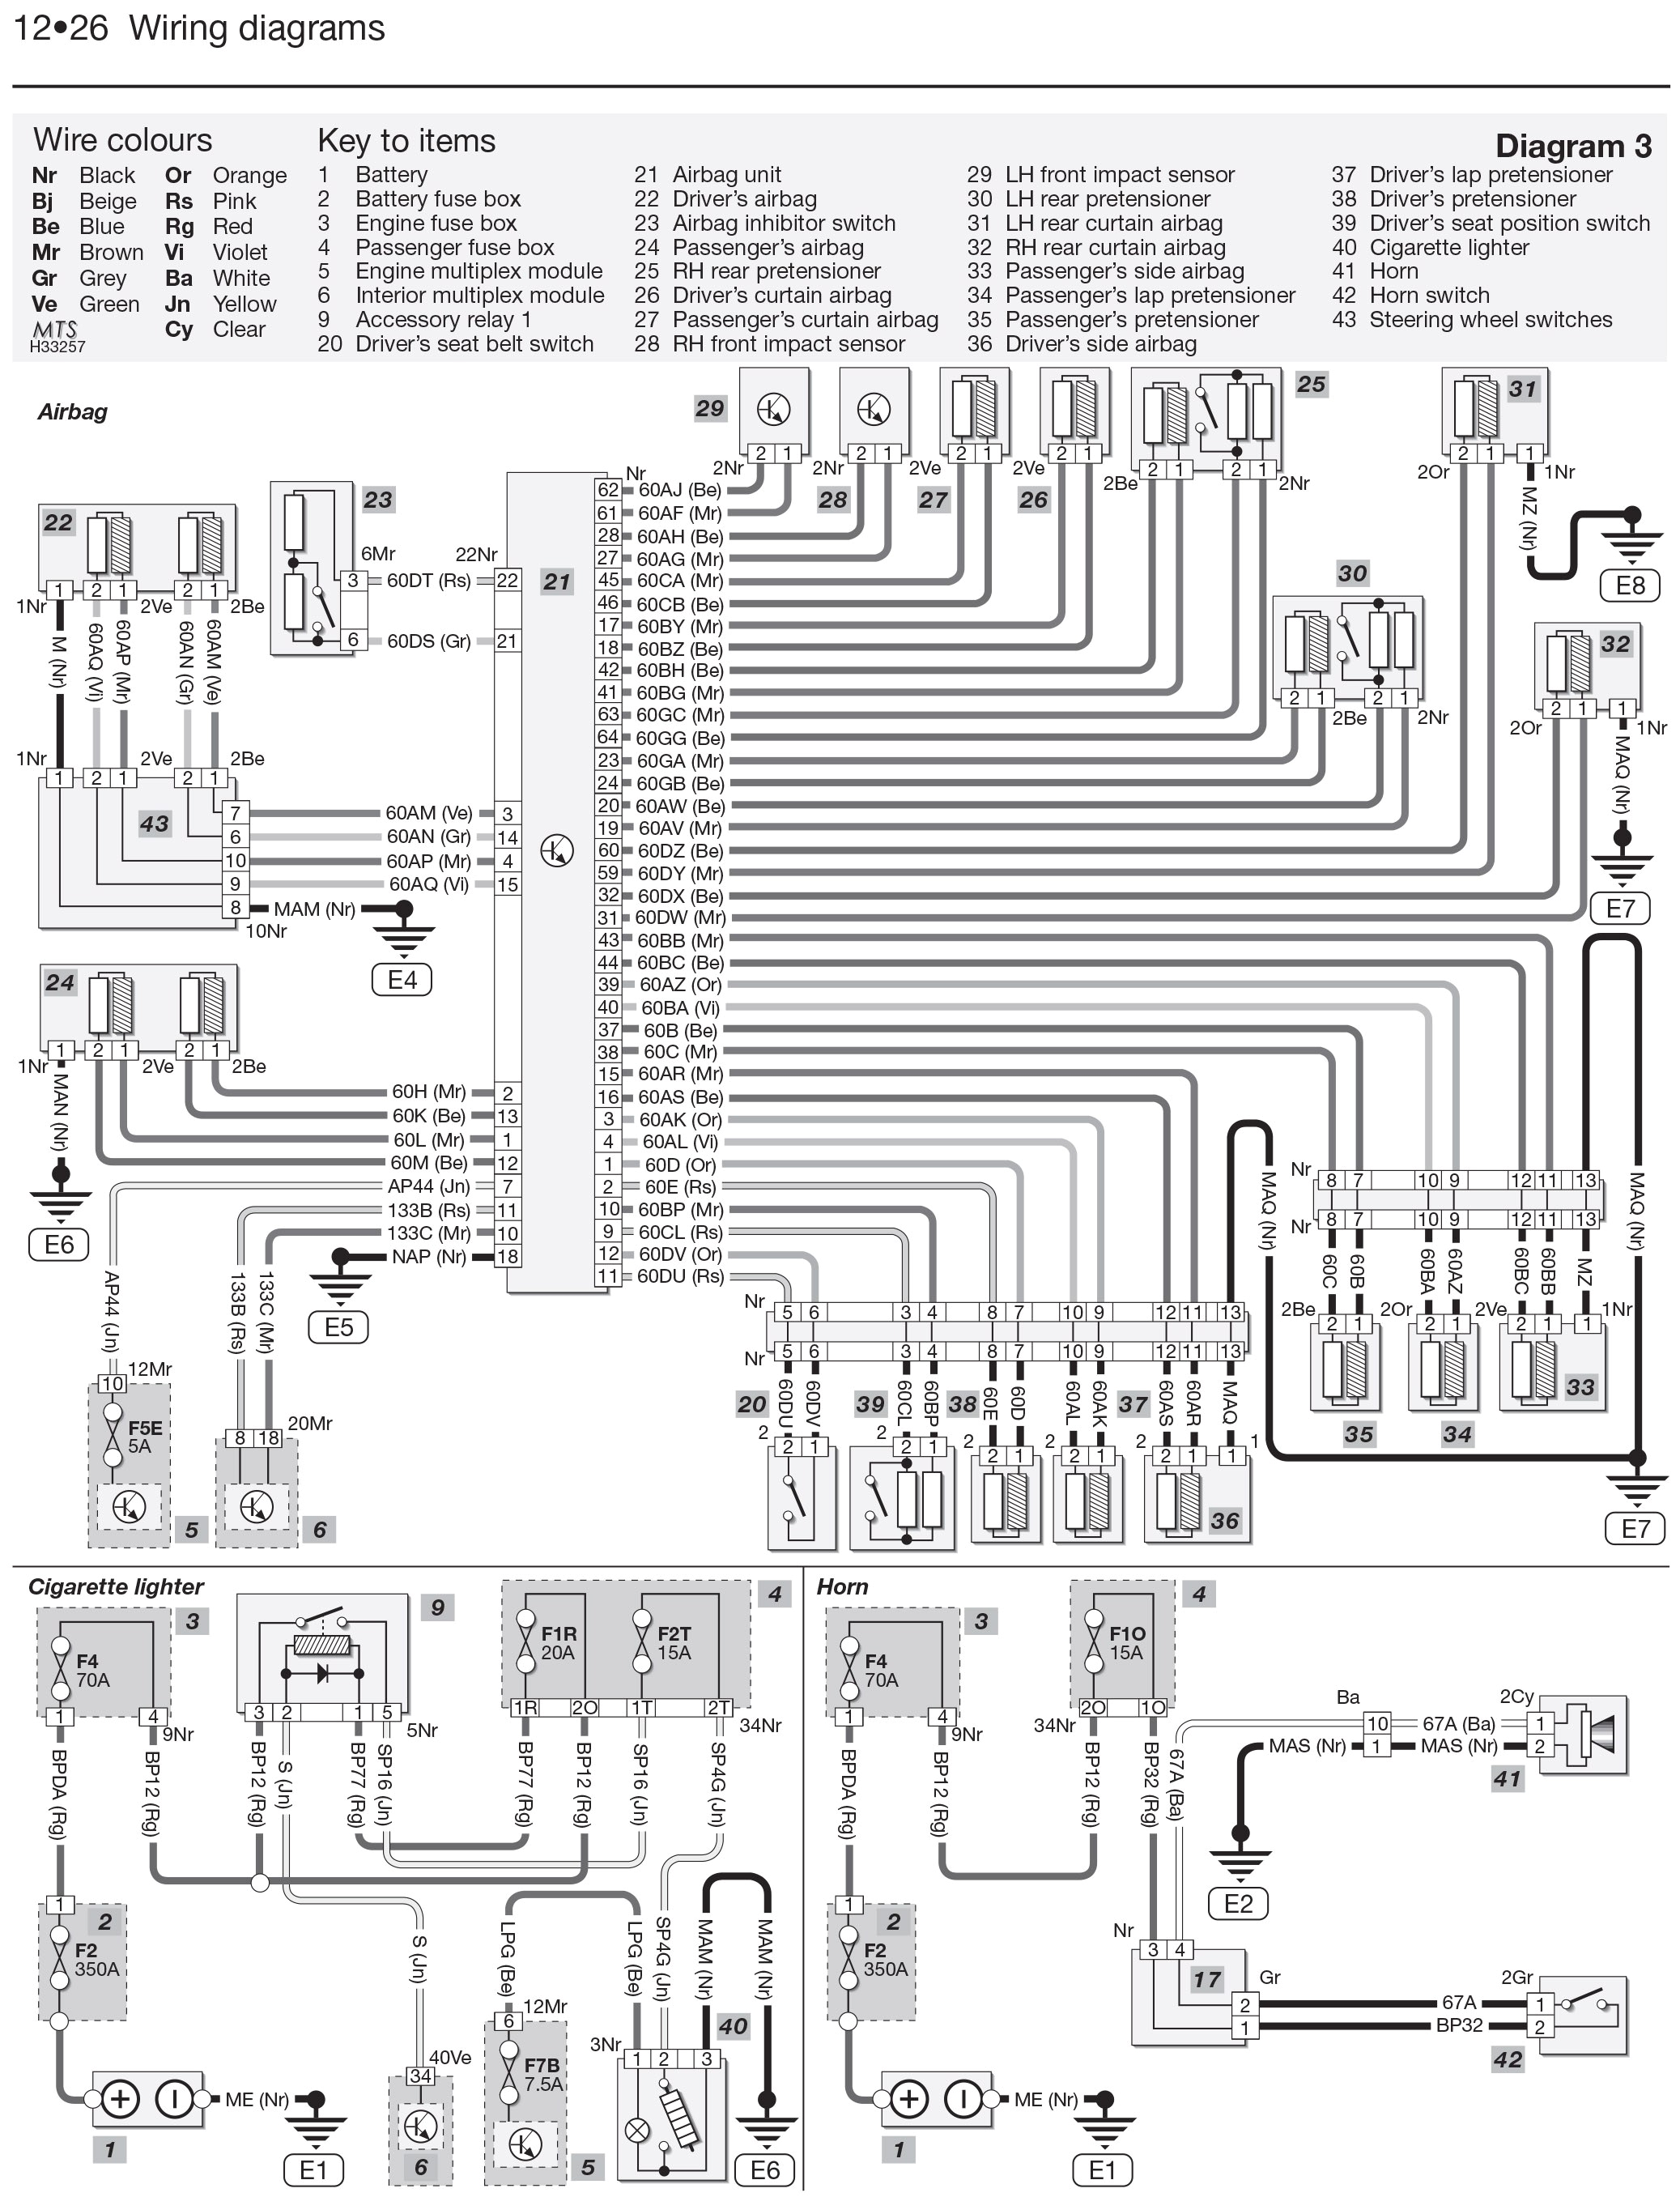 wiring diagram renault megane scenic schema diagram databasewiring diagram for renault clio 2000 wiring diagram database